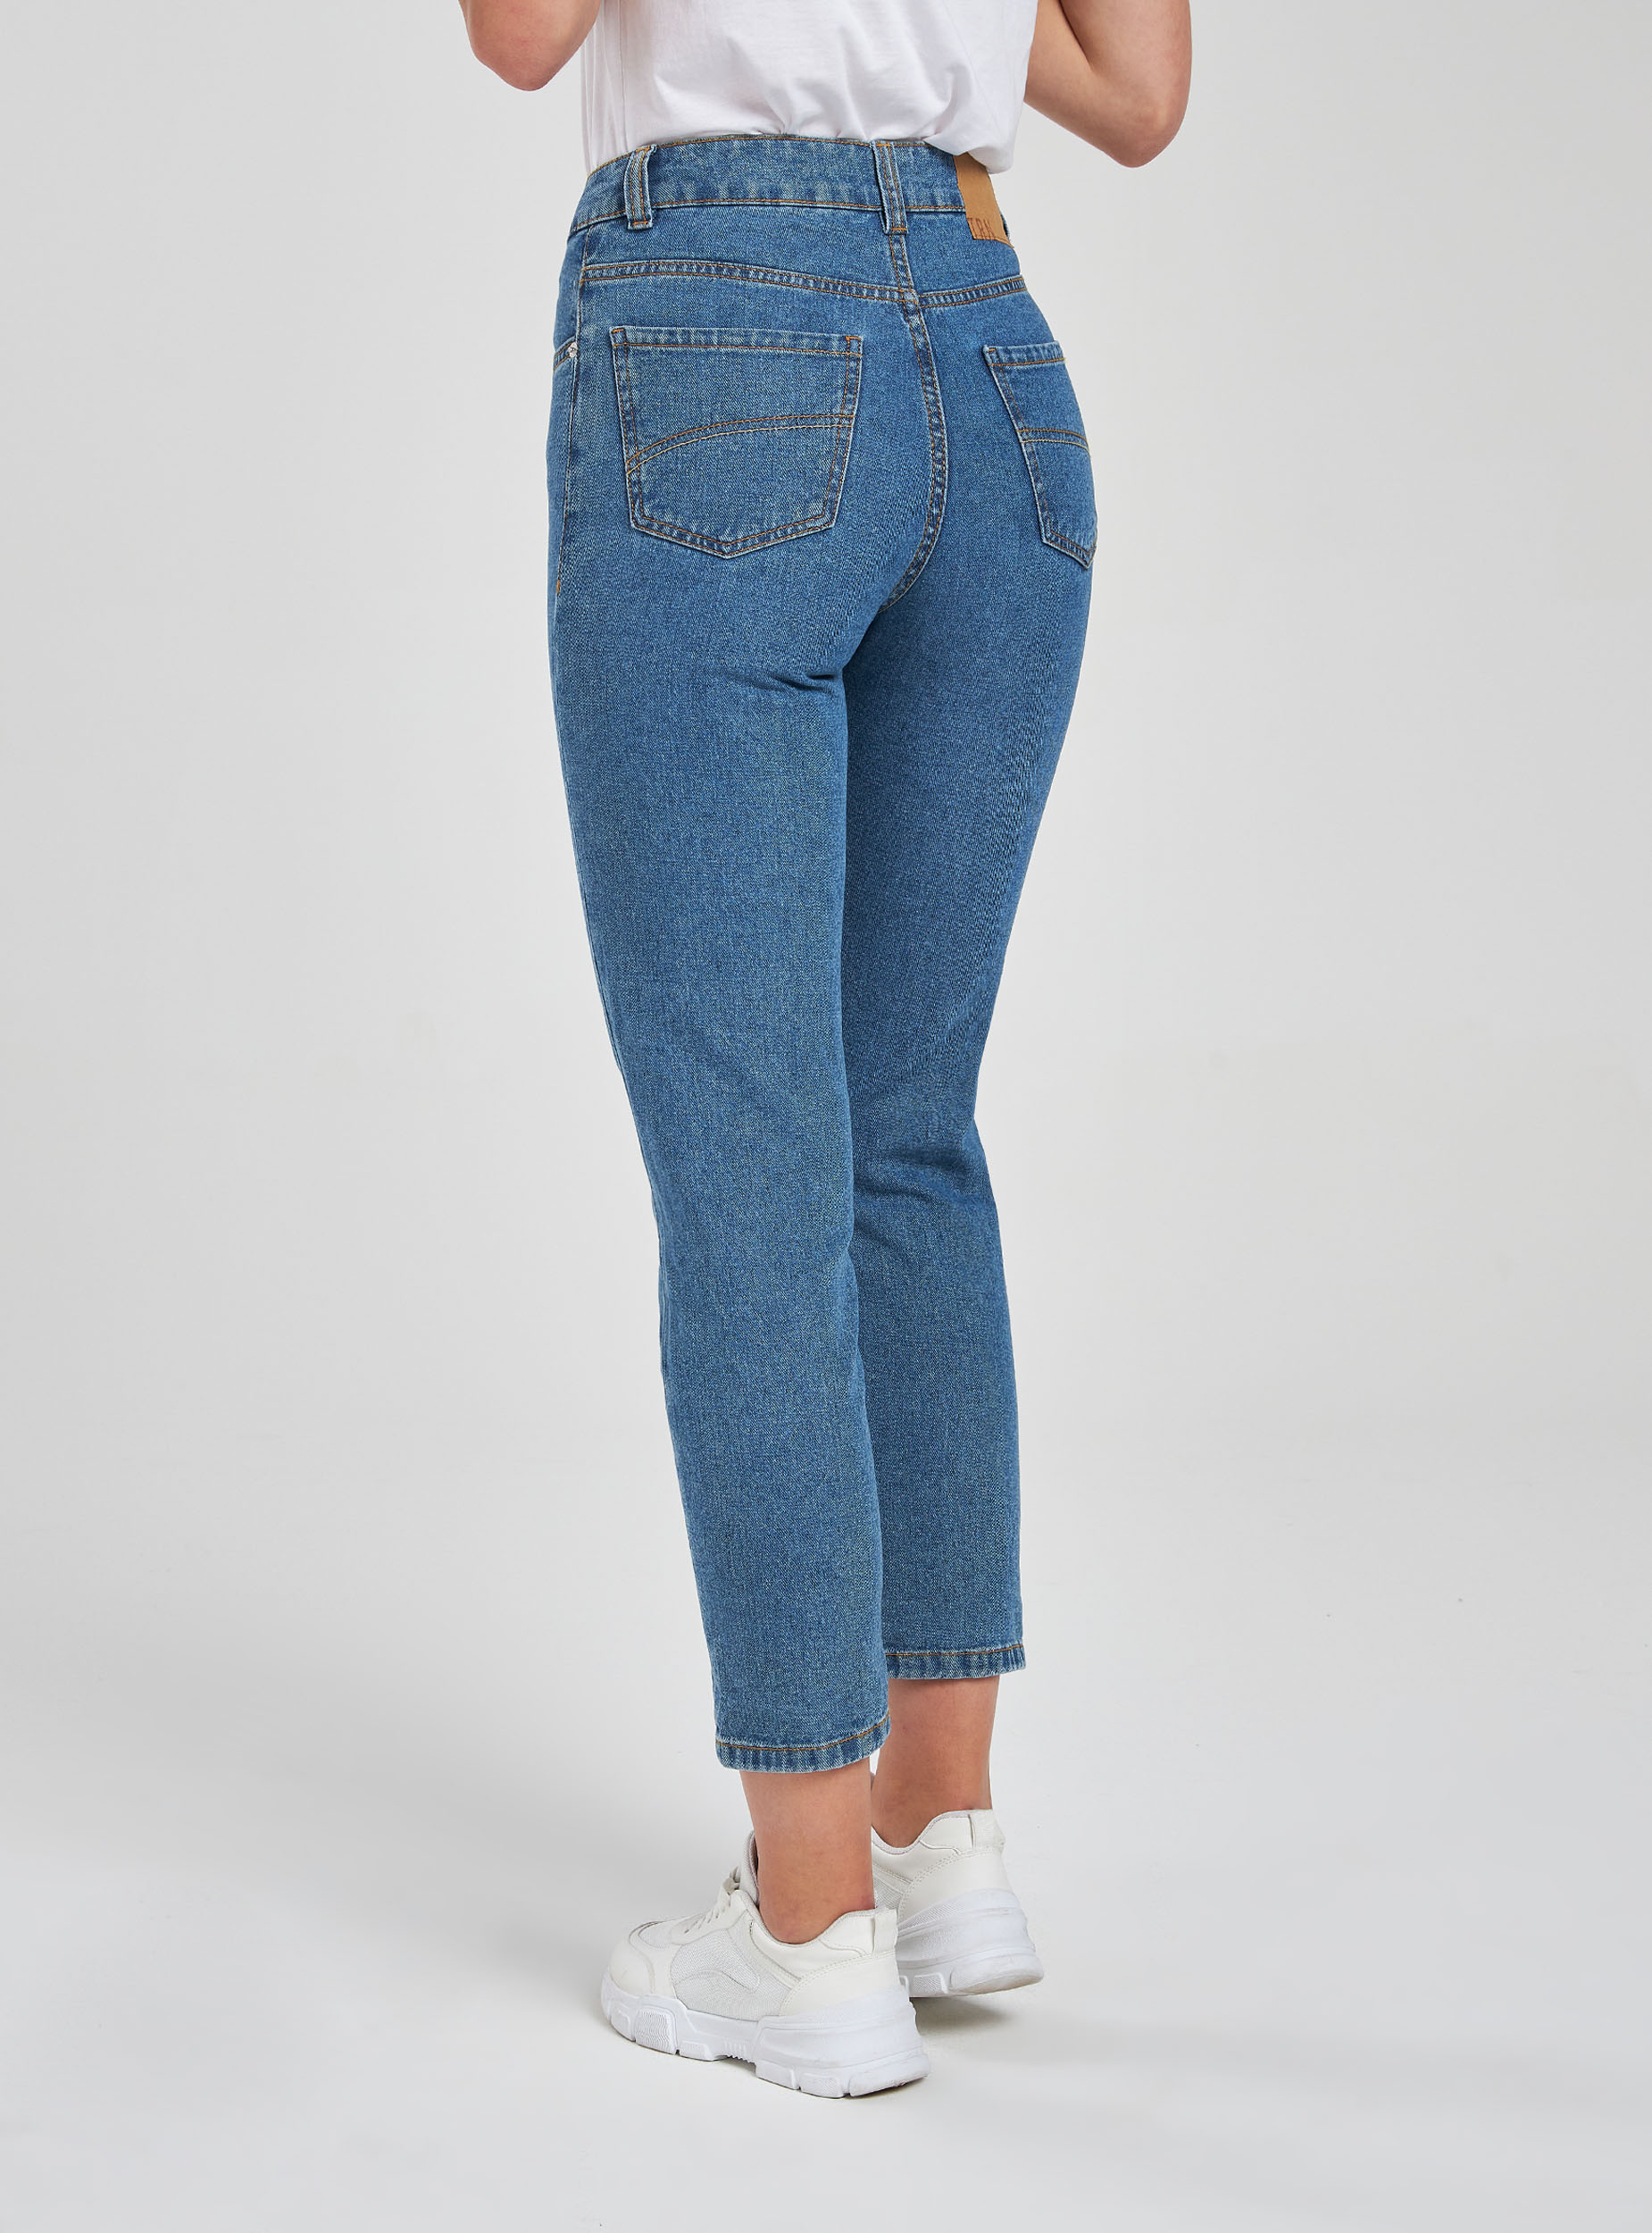 gina tricot perfect jeans alex